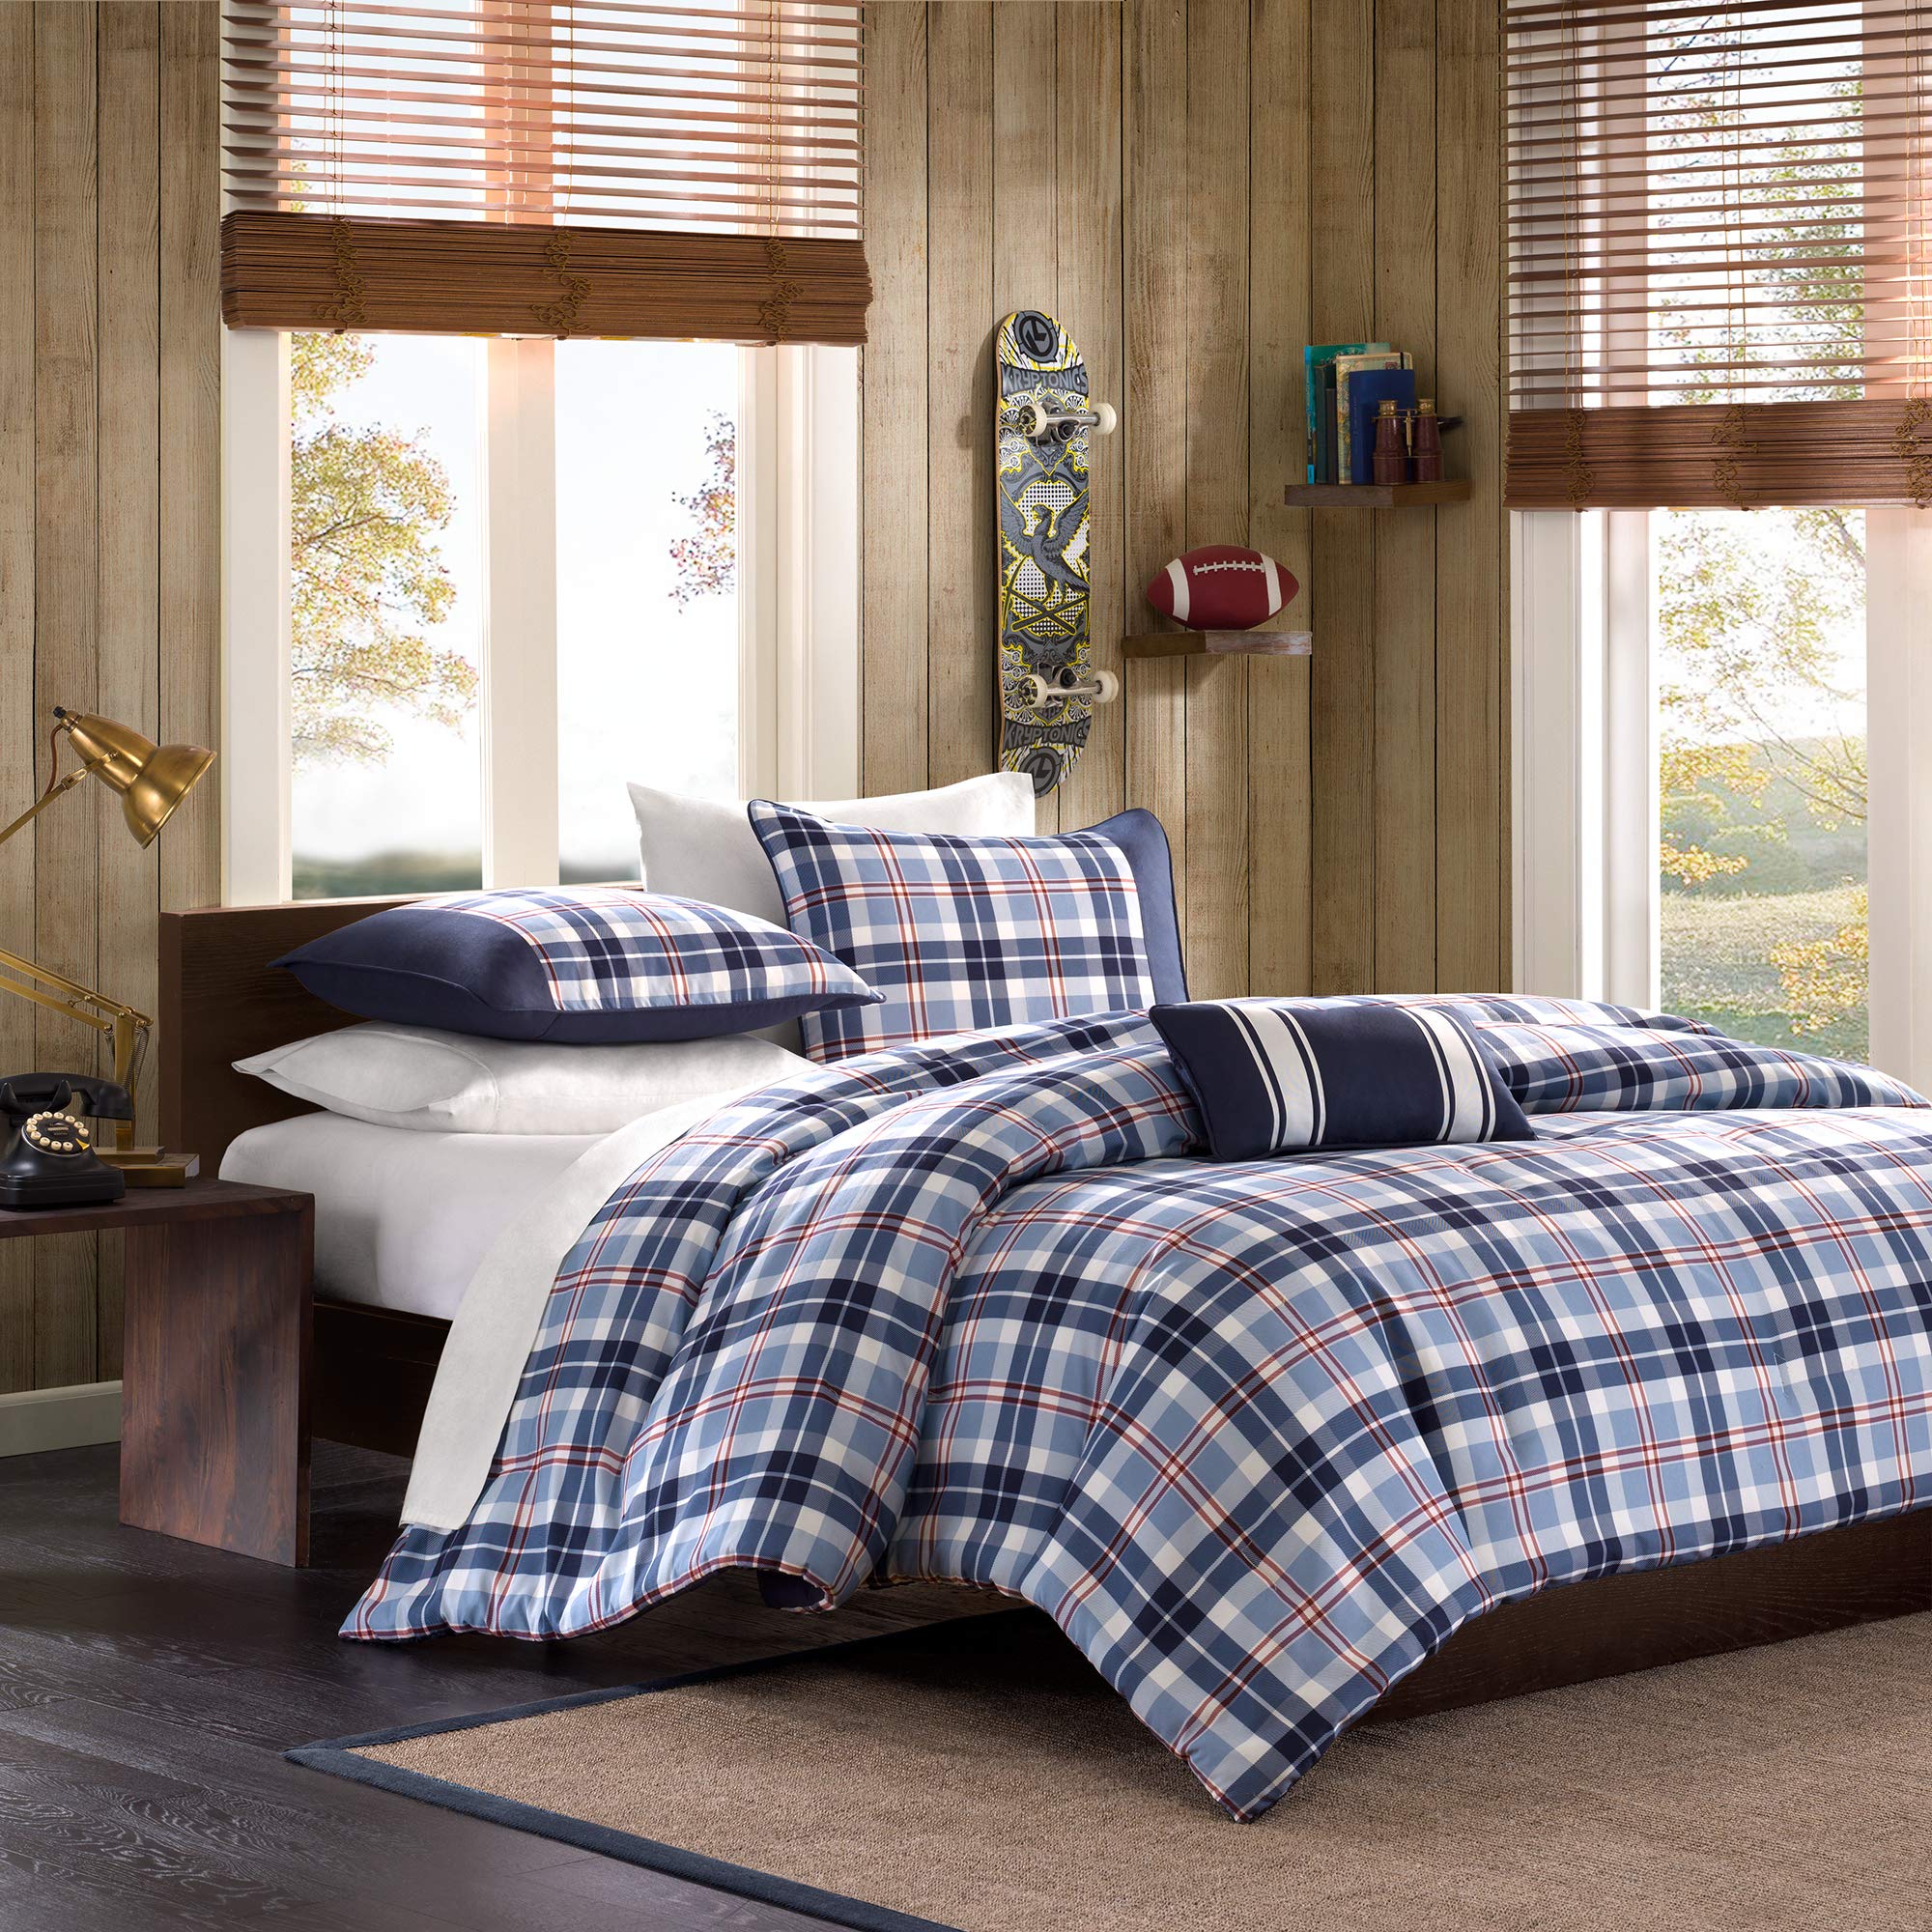 Book Cover Mi Zone Cozy Comforter Set Cabin Lifestyle Plaid Design All Season Bedding Matching Shams, Decorative Pillow, Twin/Twin XL, Elliot Blue 3 Piece